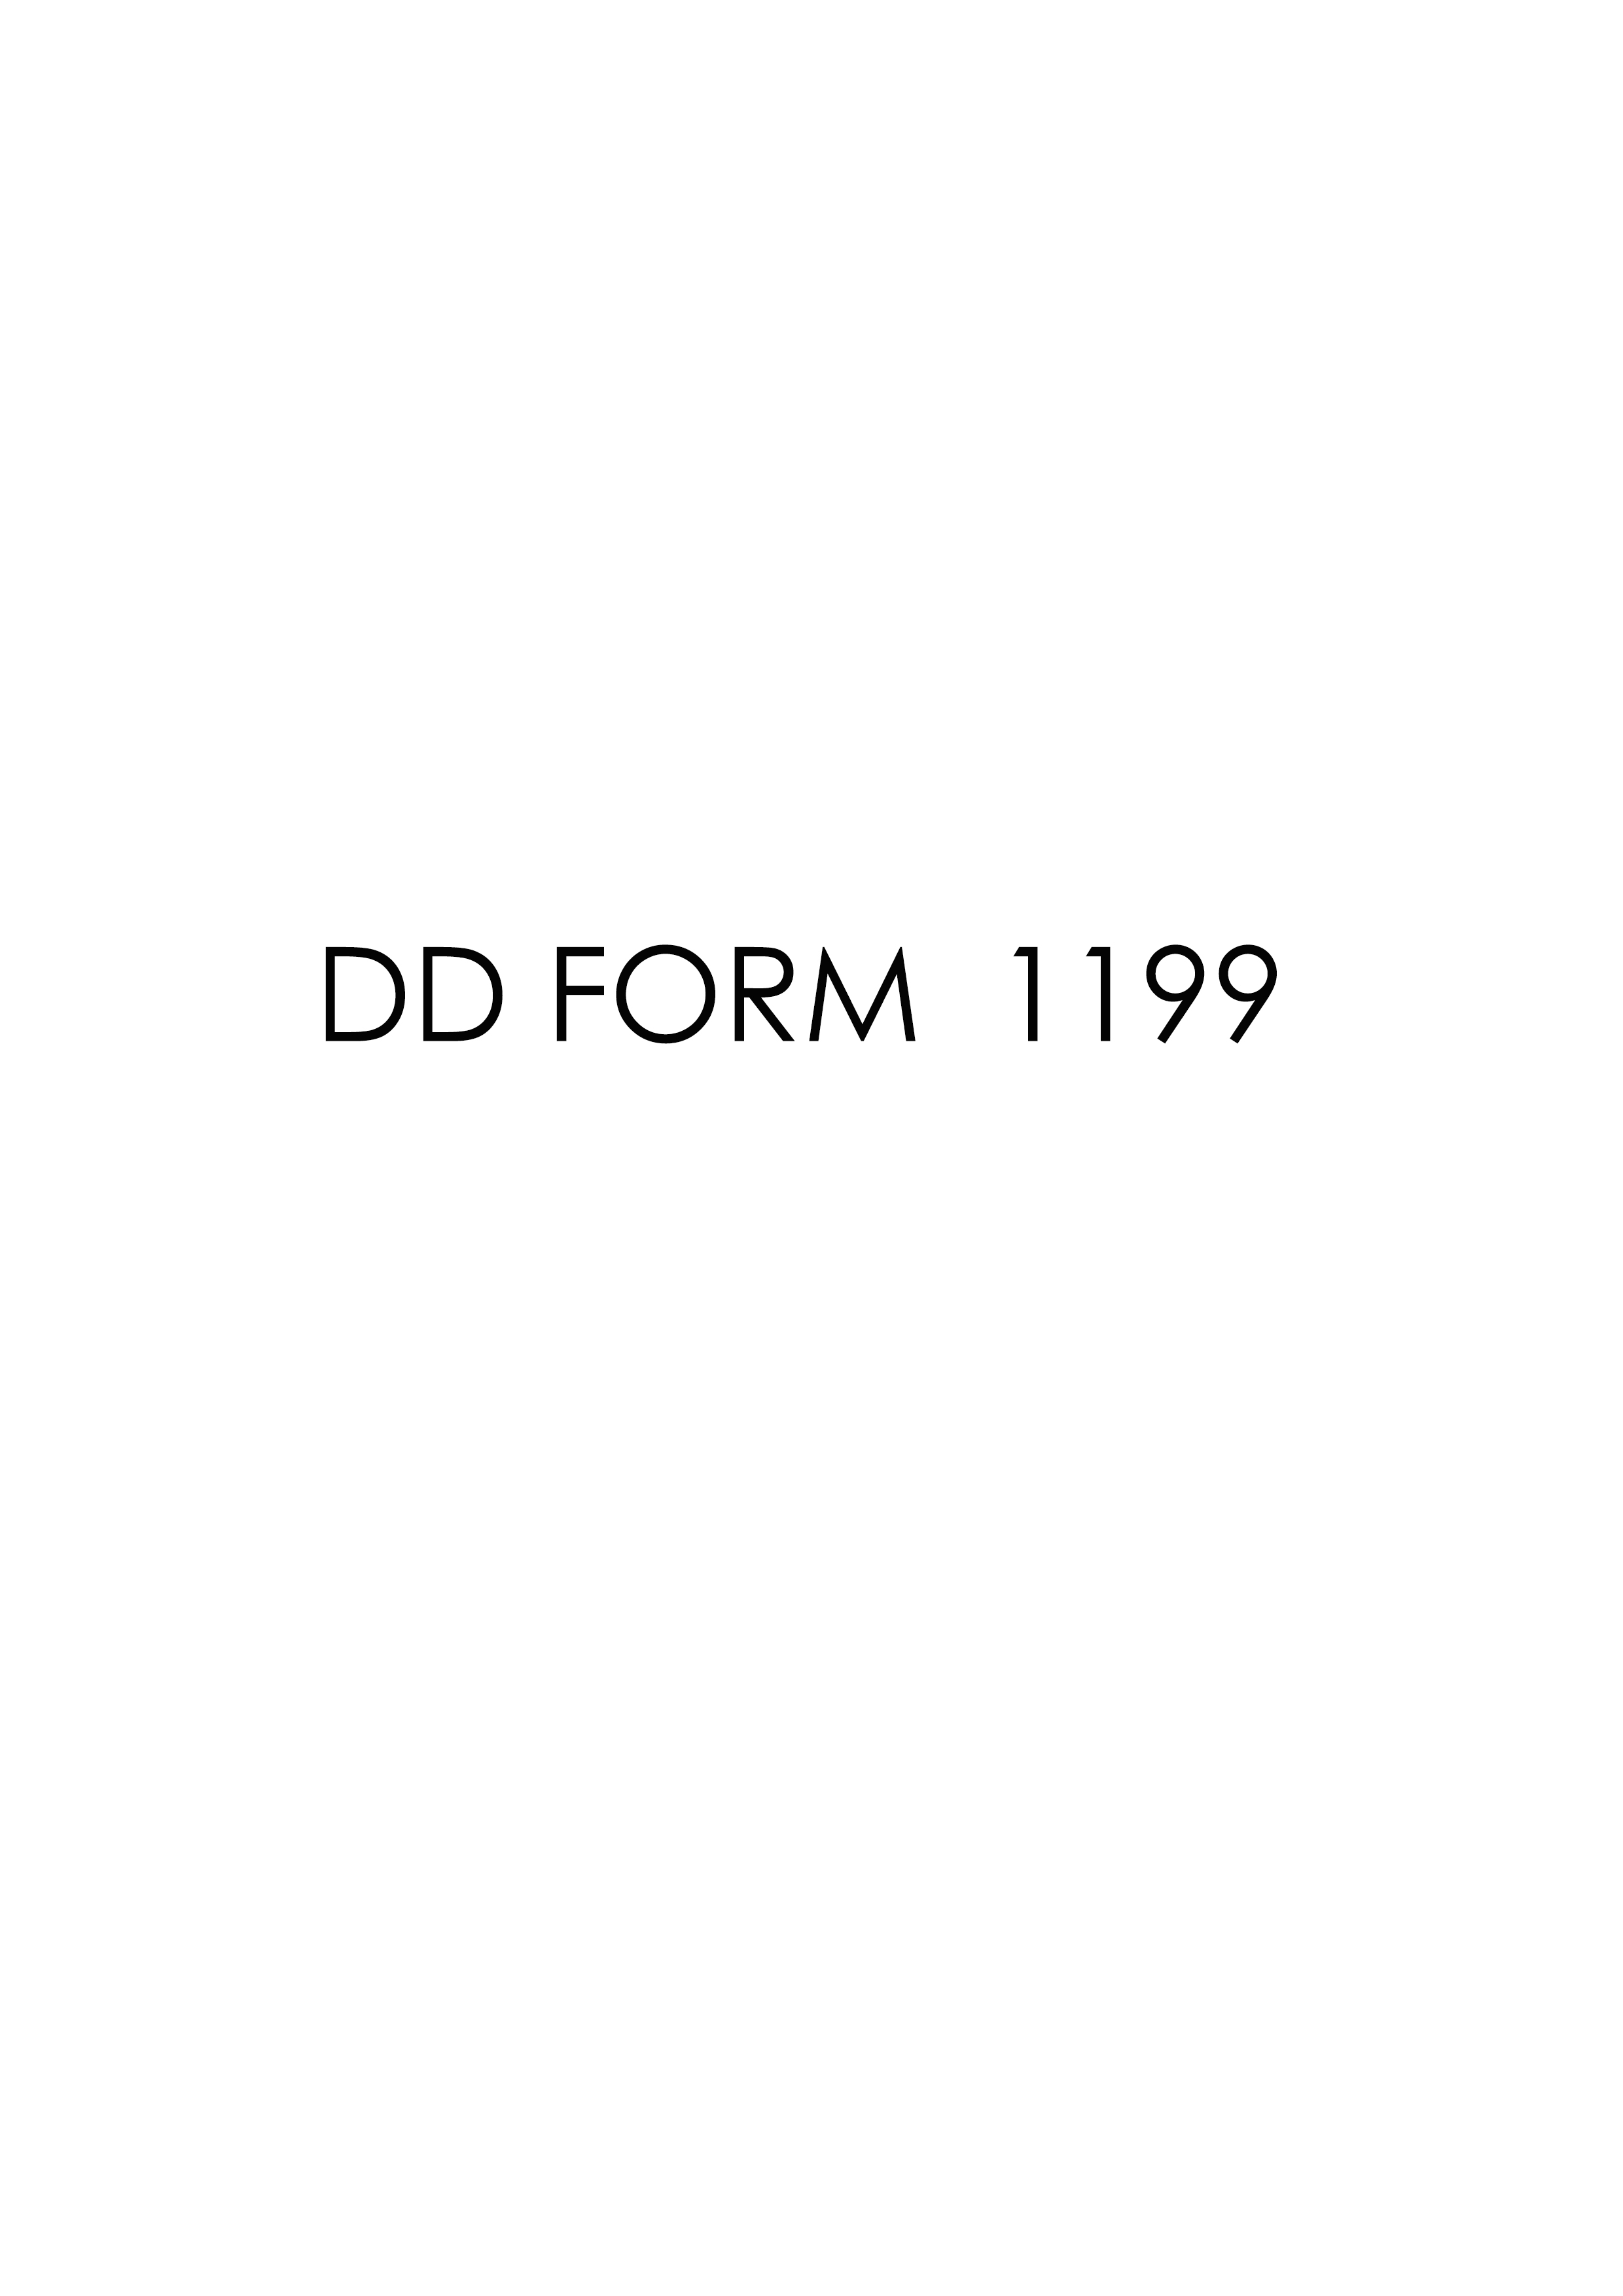 Download dd Form 1199